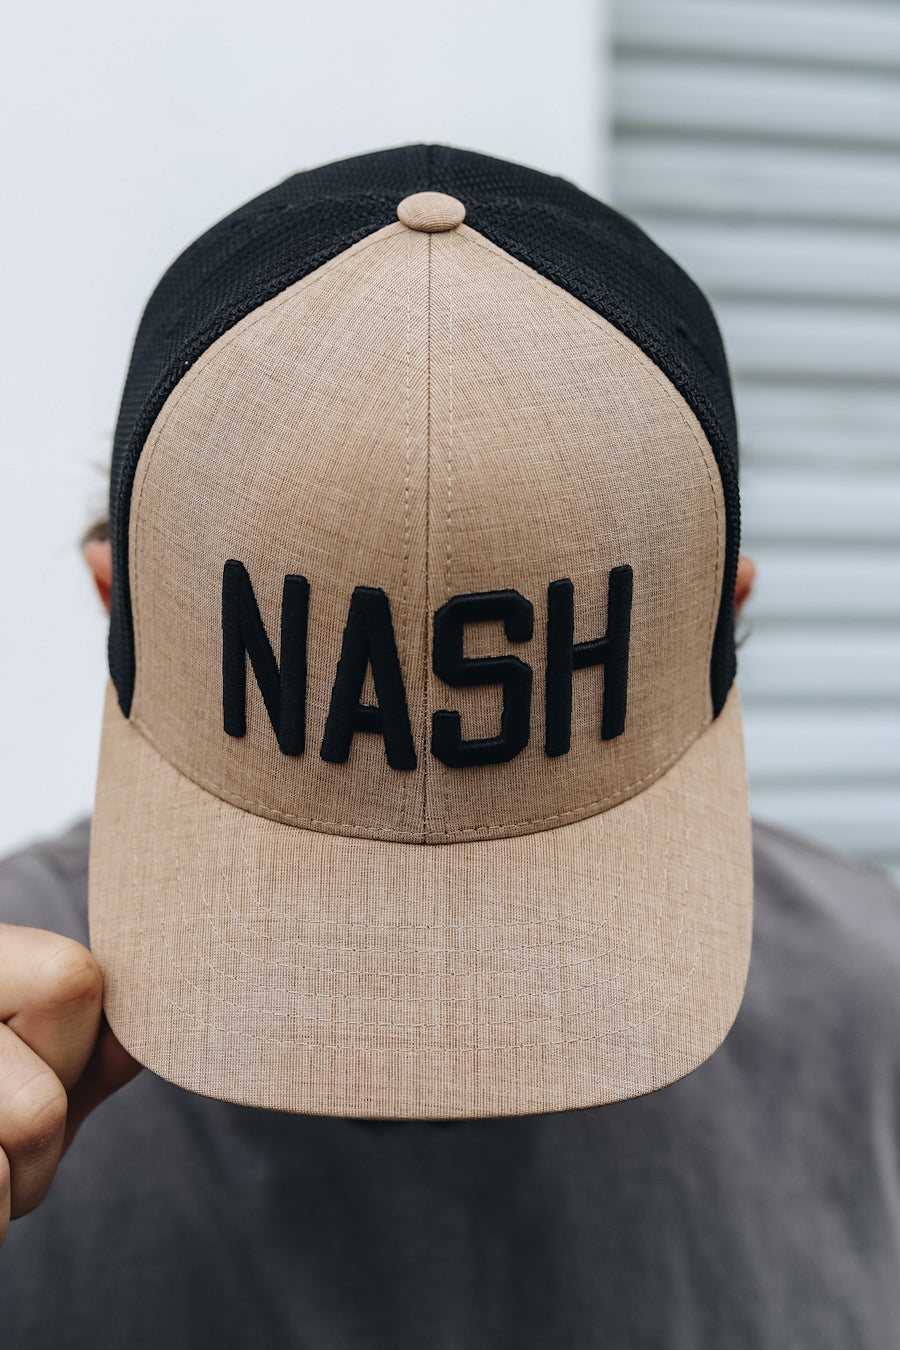 NASH Trucker [Tan/Black]